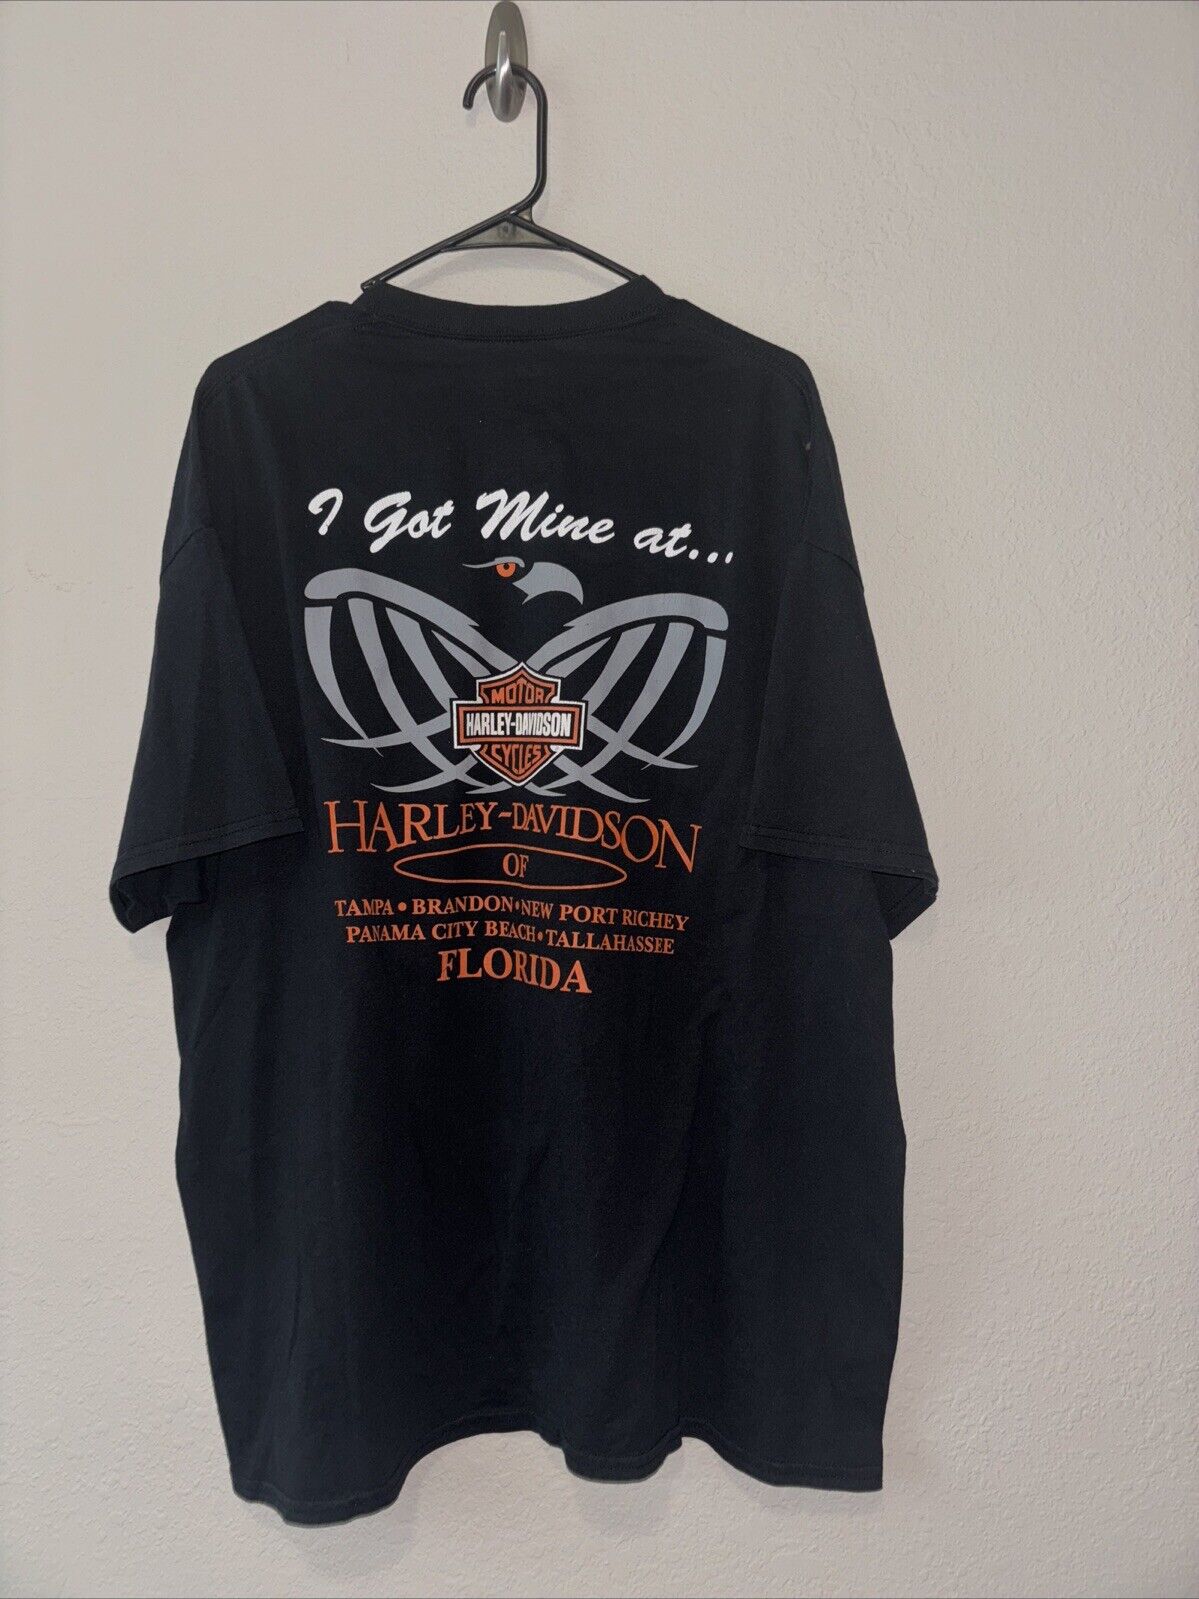 Harley Davidson Adult I Got Mine at Harley Davidson of Florida T-Shirt Size 2XL